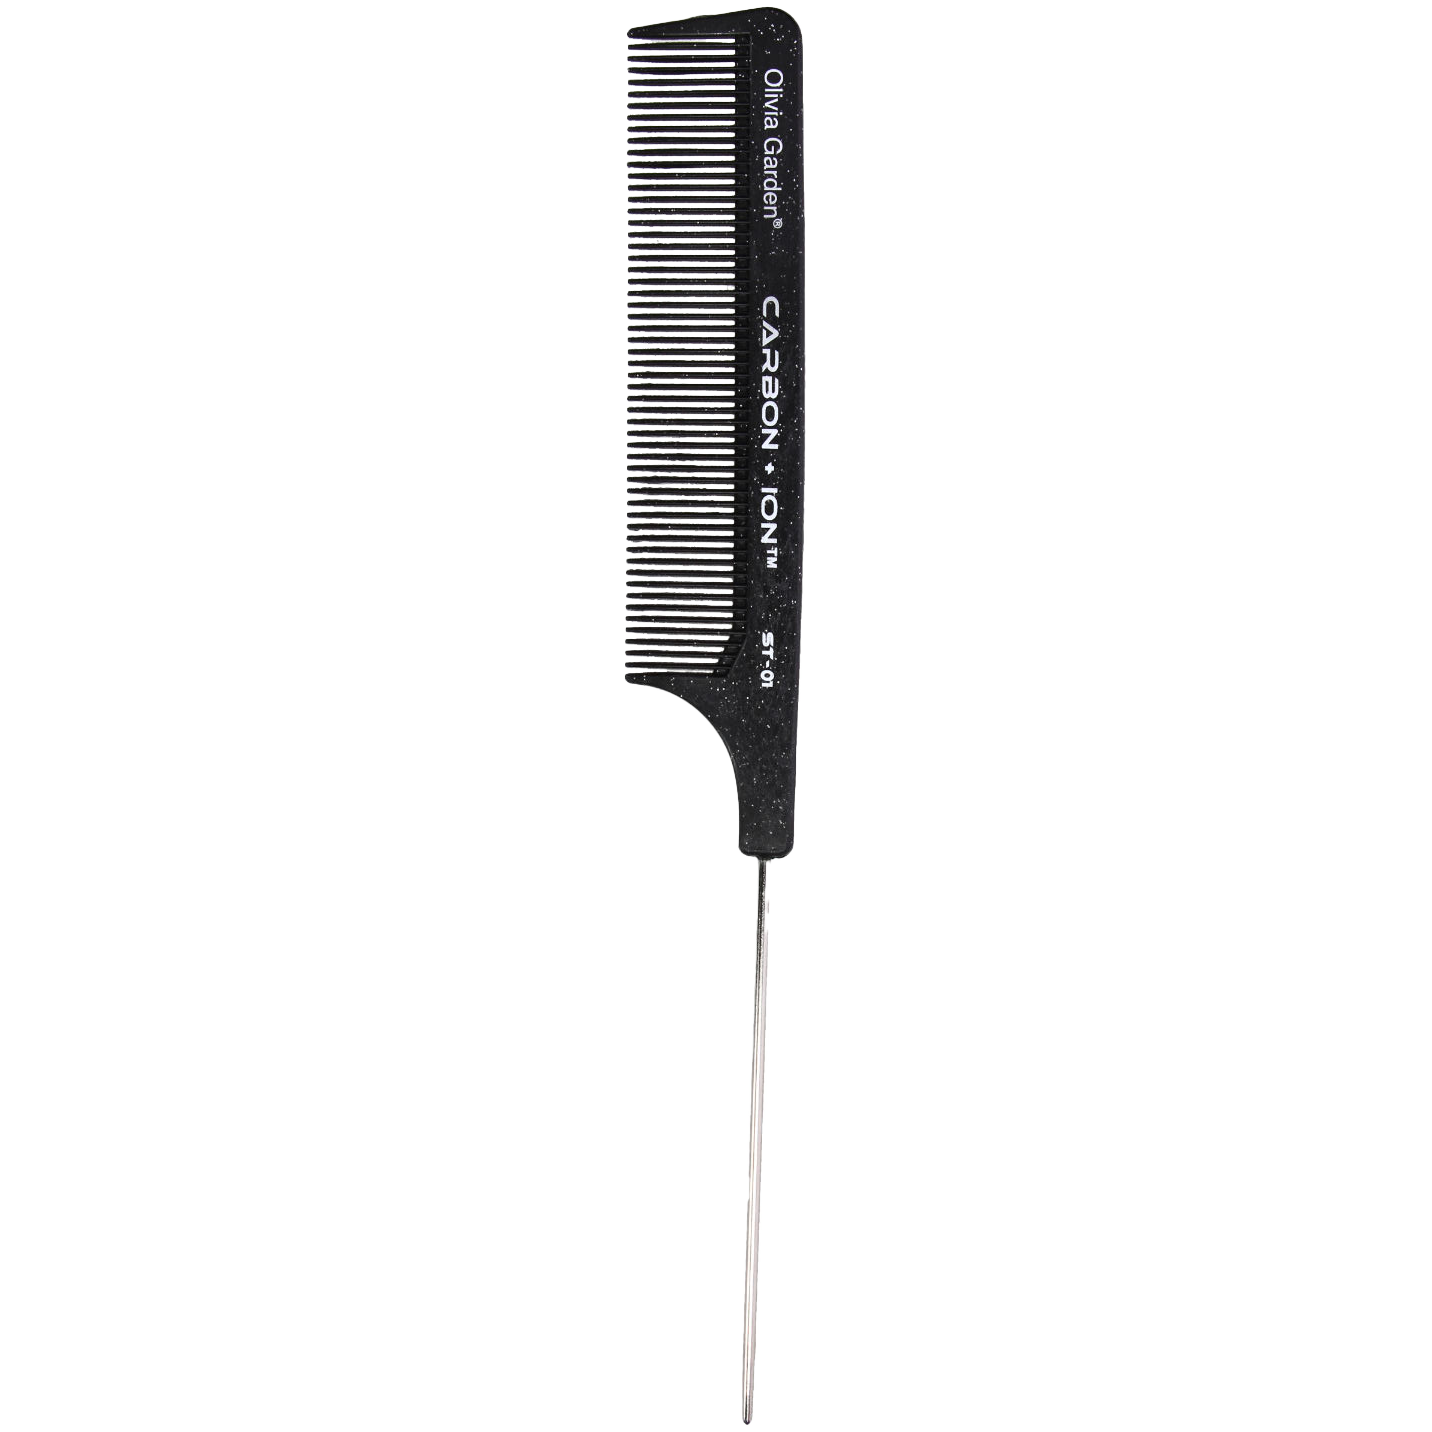 Olivia Garden Carbon Comb ST-1 расческа для волос ST-1, 1 шт. цена и фото